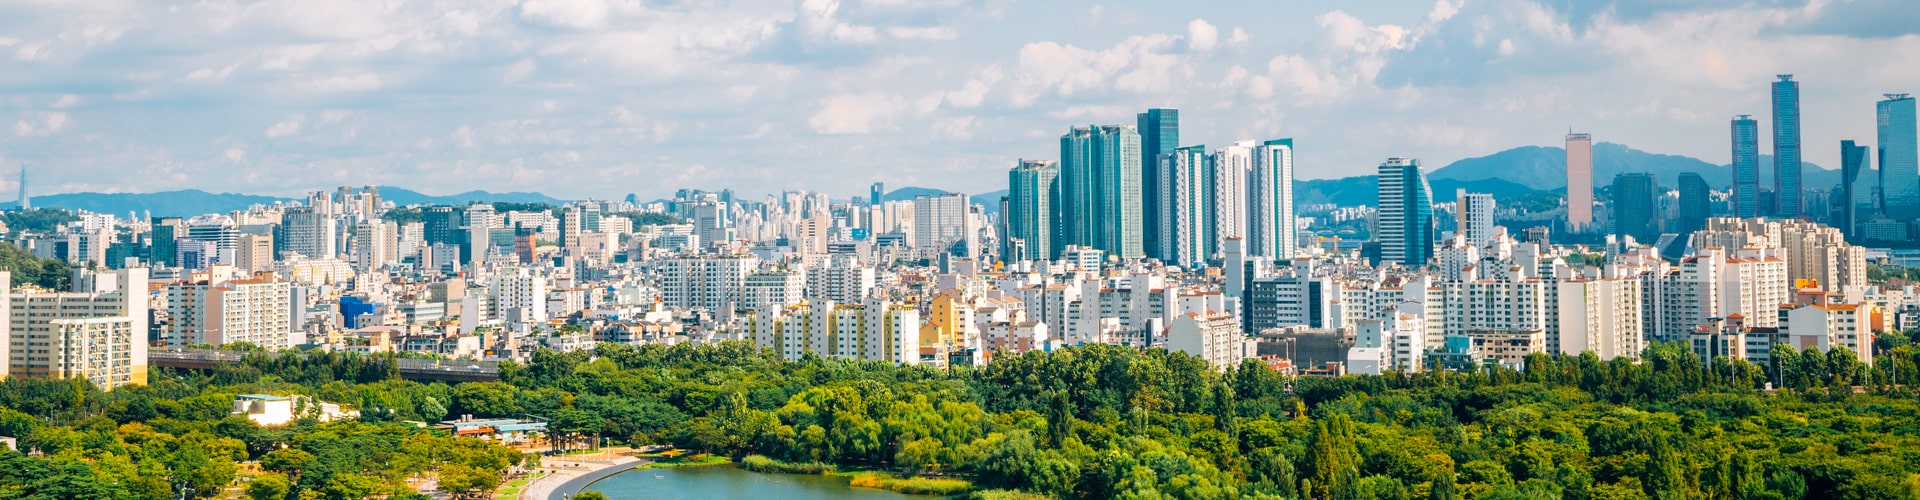 Panorama de la ville de Séoul